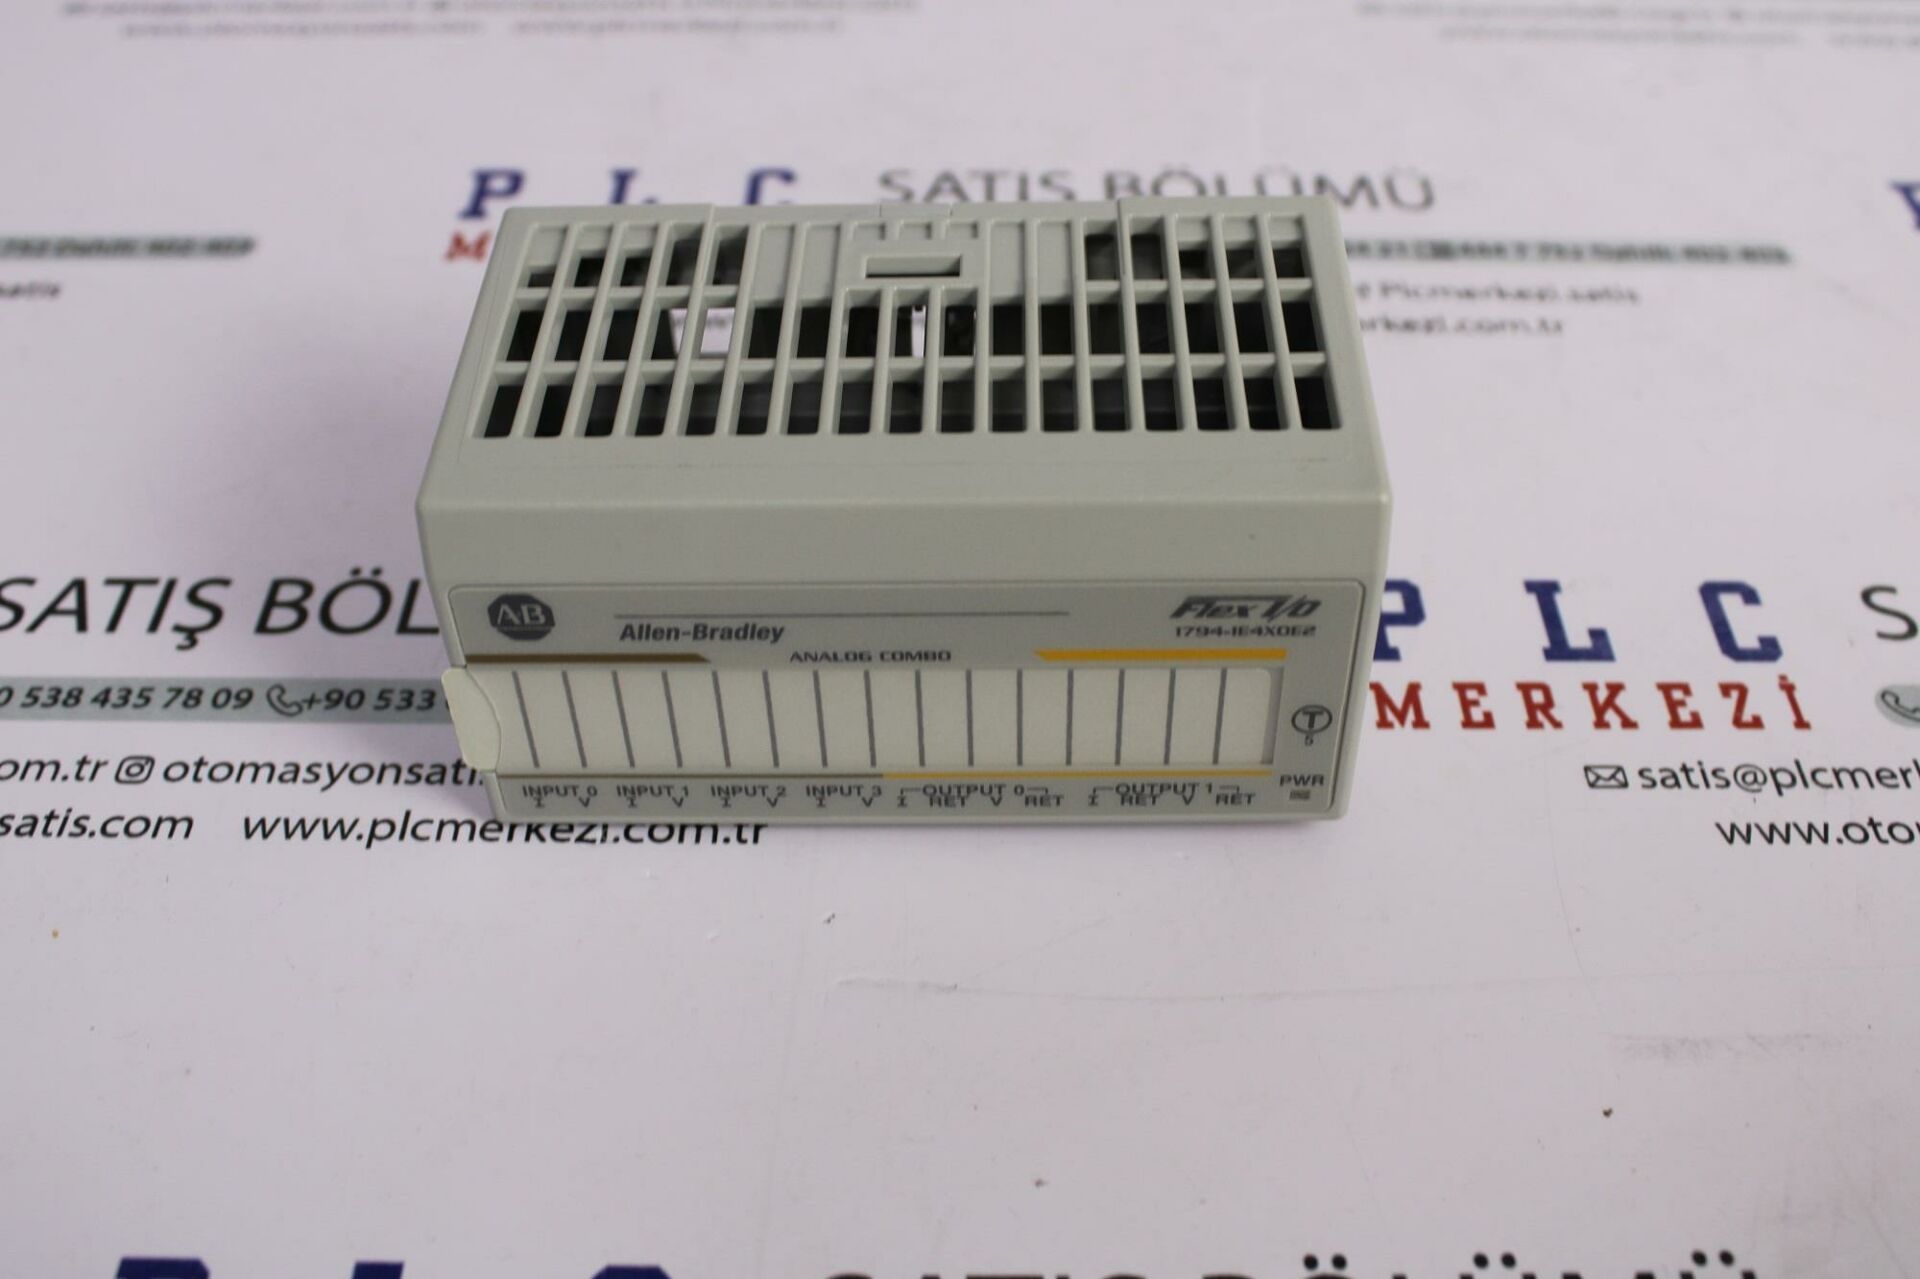 1794-IE4XOE2 24Vdc 4 Input/2 Output Analog Combo Module